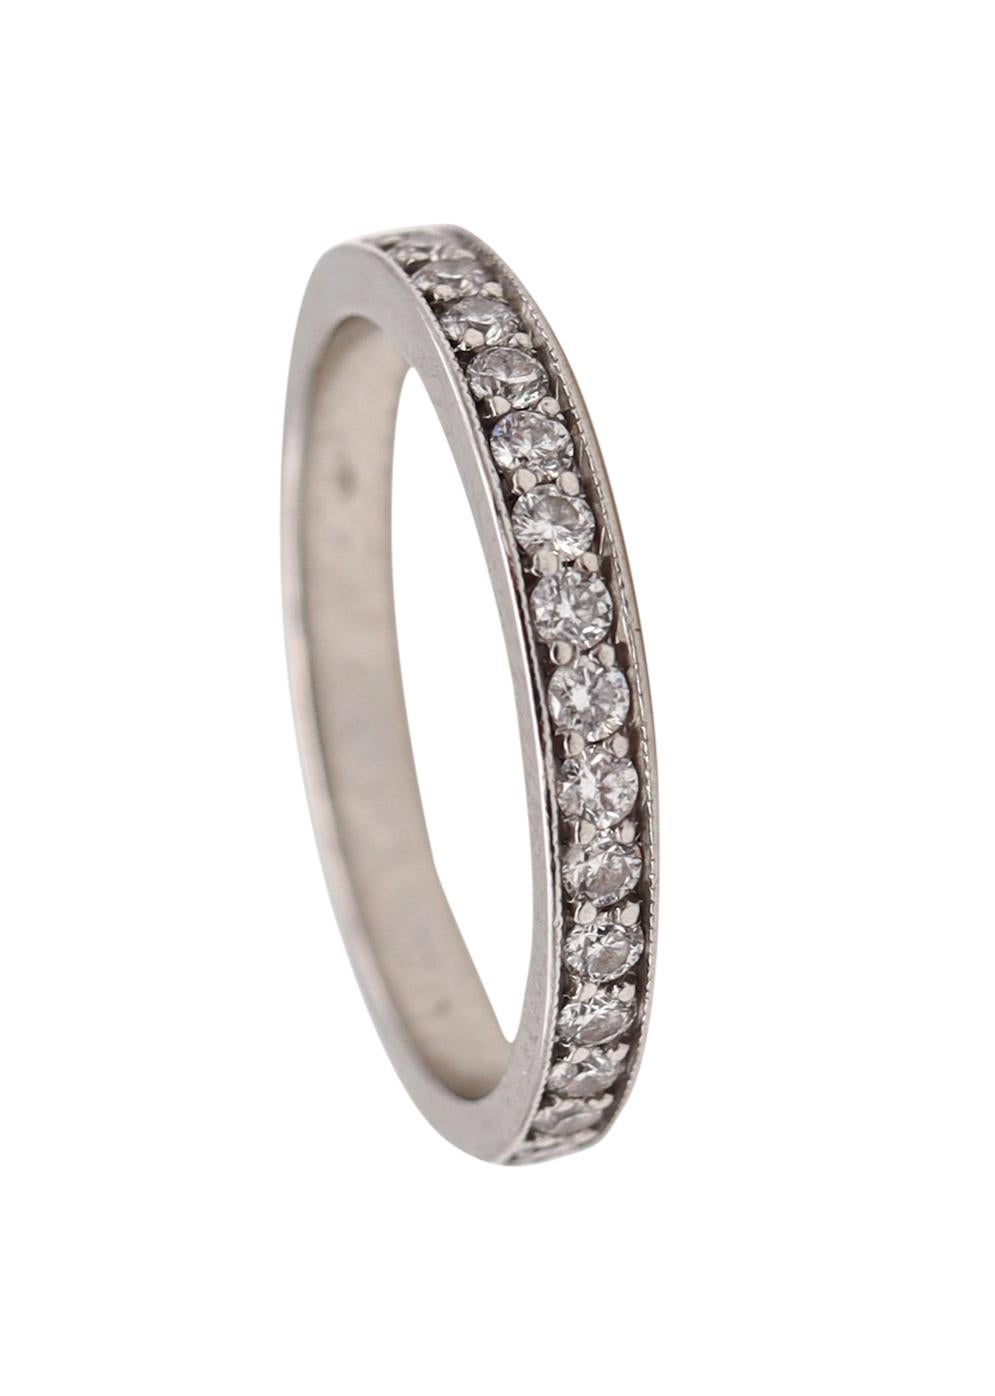 Classic Eternity Ring in Platinum with 32 VS-2 Round Diamonds